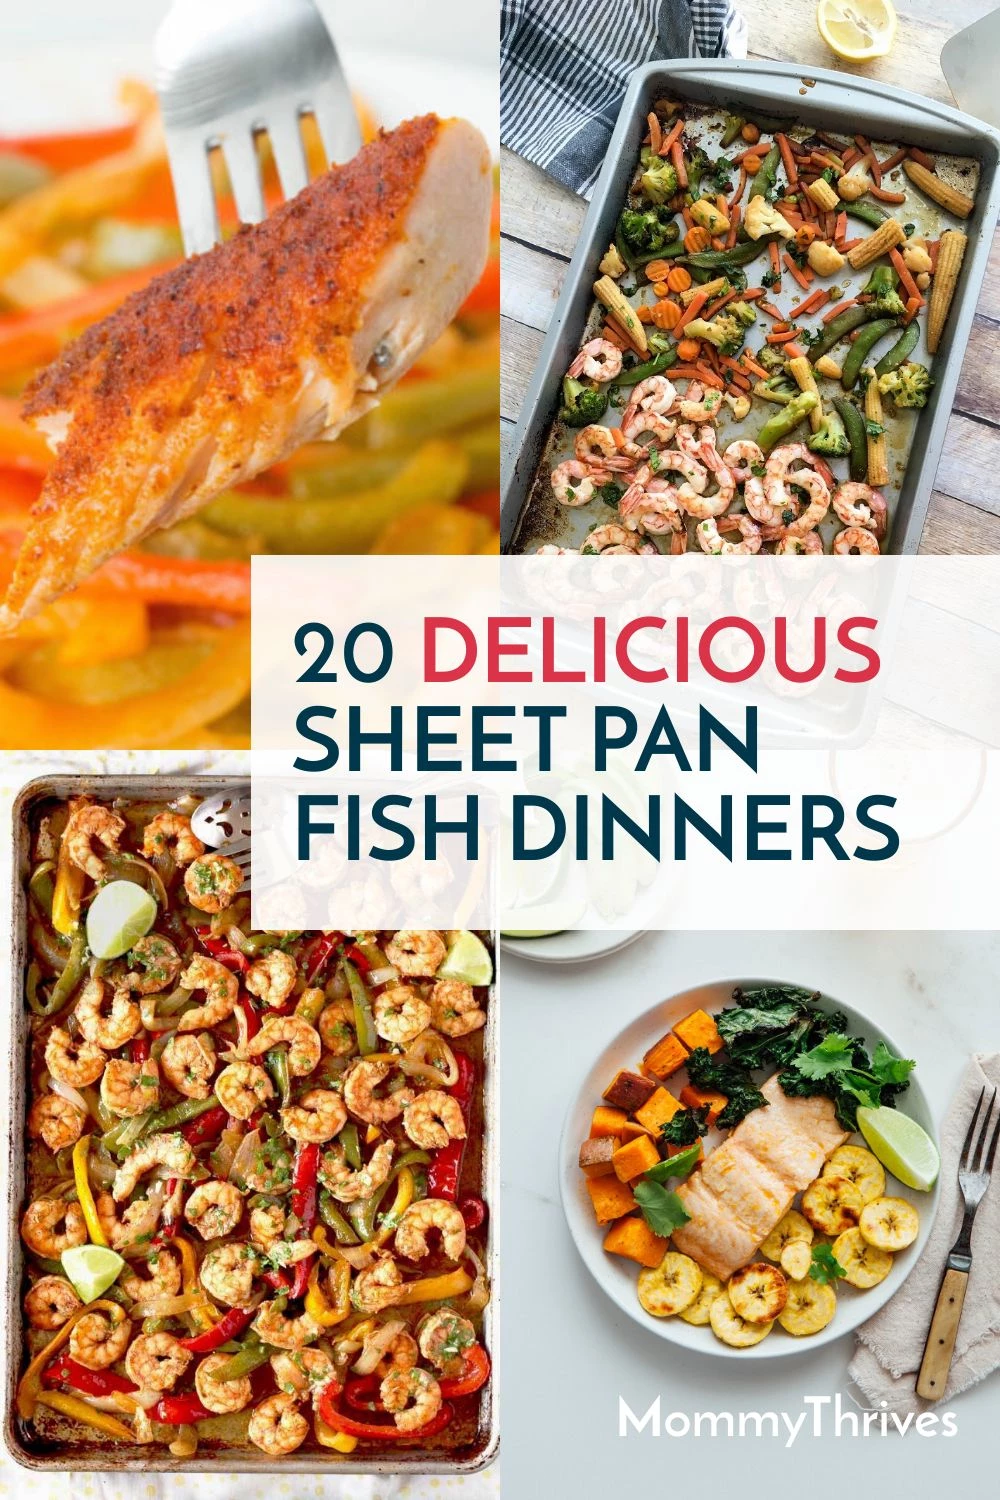 Salmon Sheet Pan Recipes - Shrimp Sheet Pan Recipes - Sheet Pan Dinner Recipes For Fish